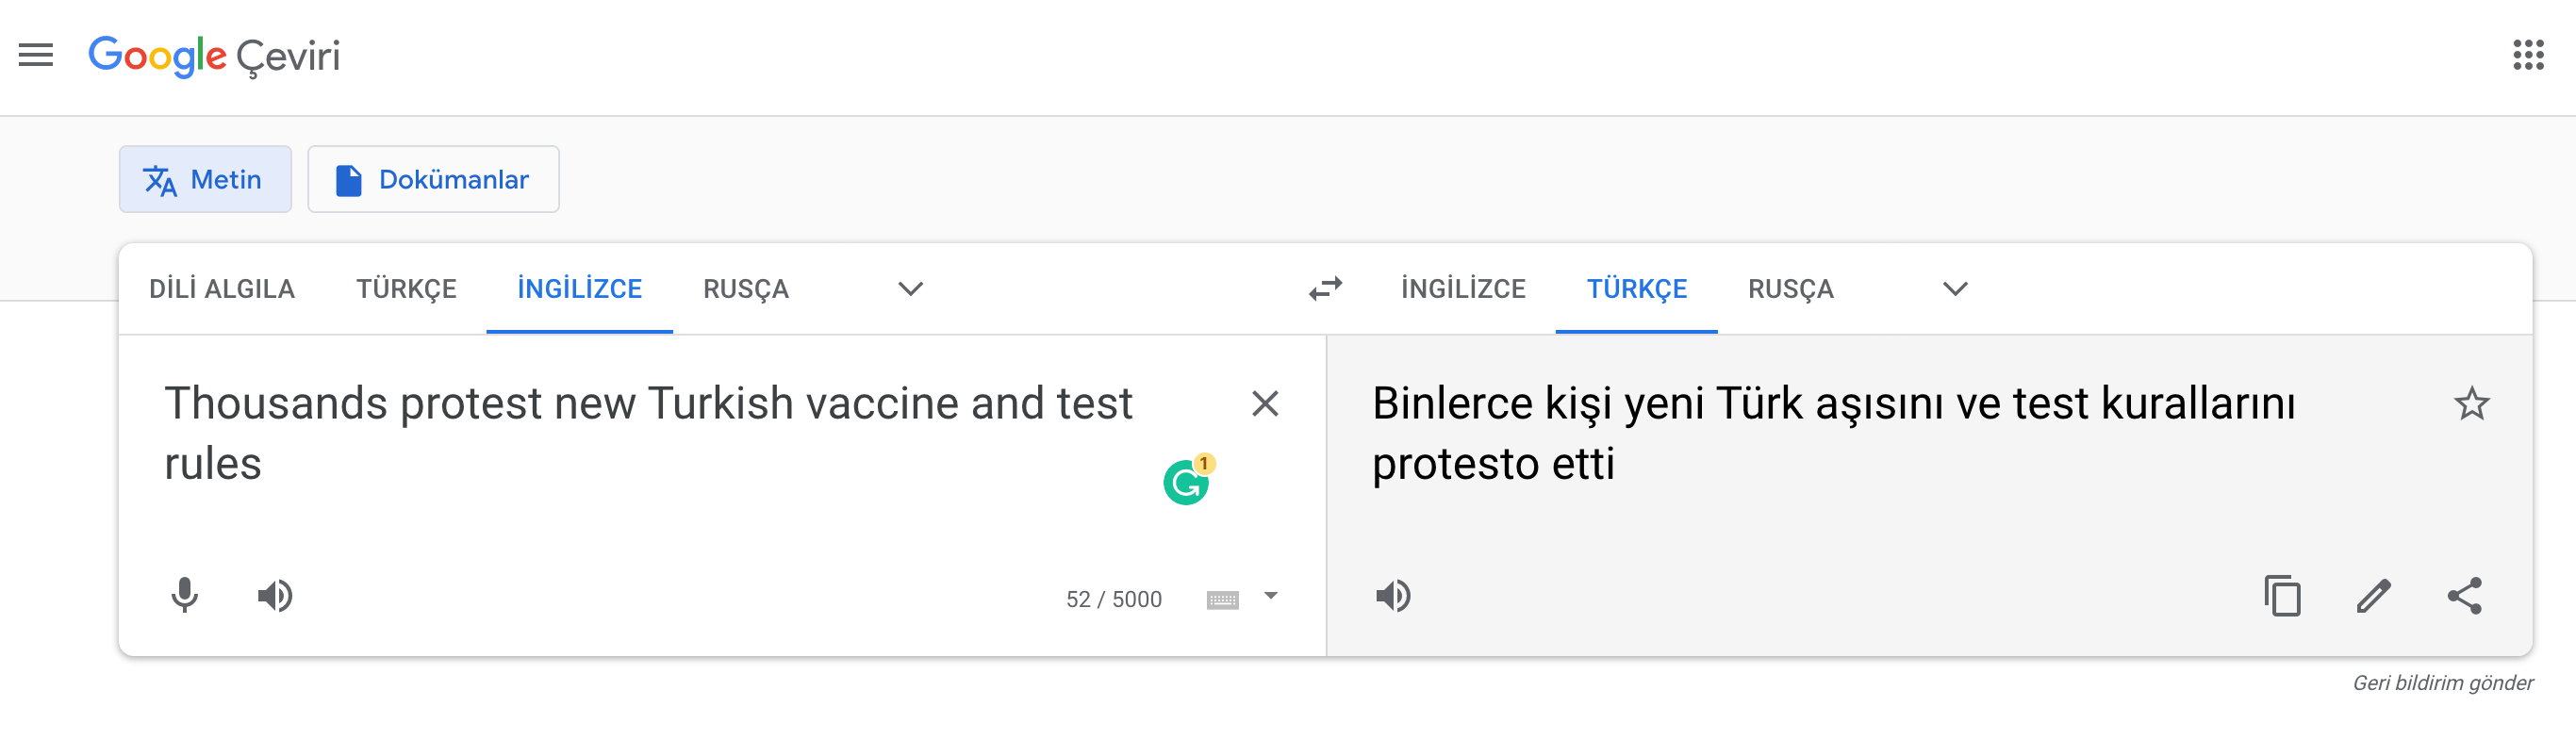 google translate turk asisi ceviri reuters